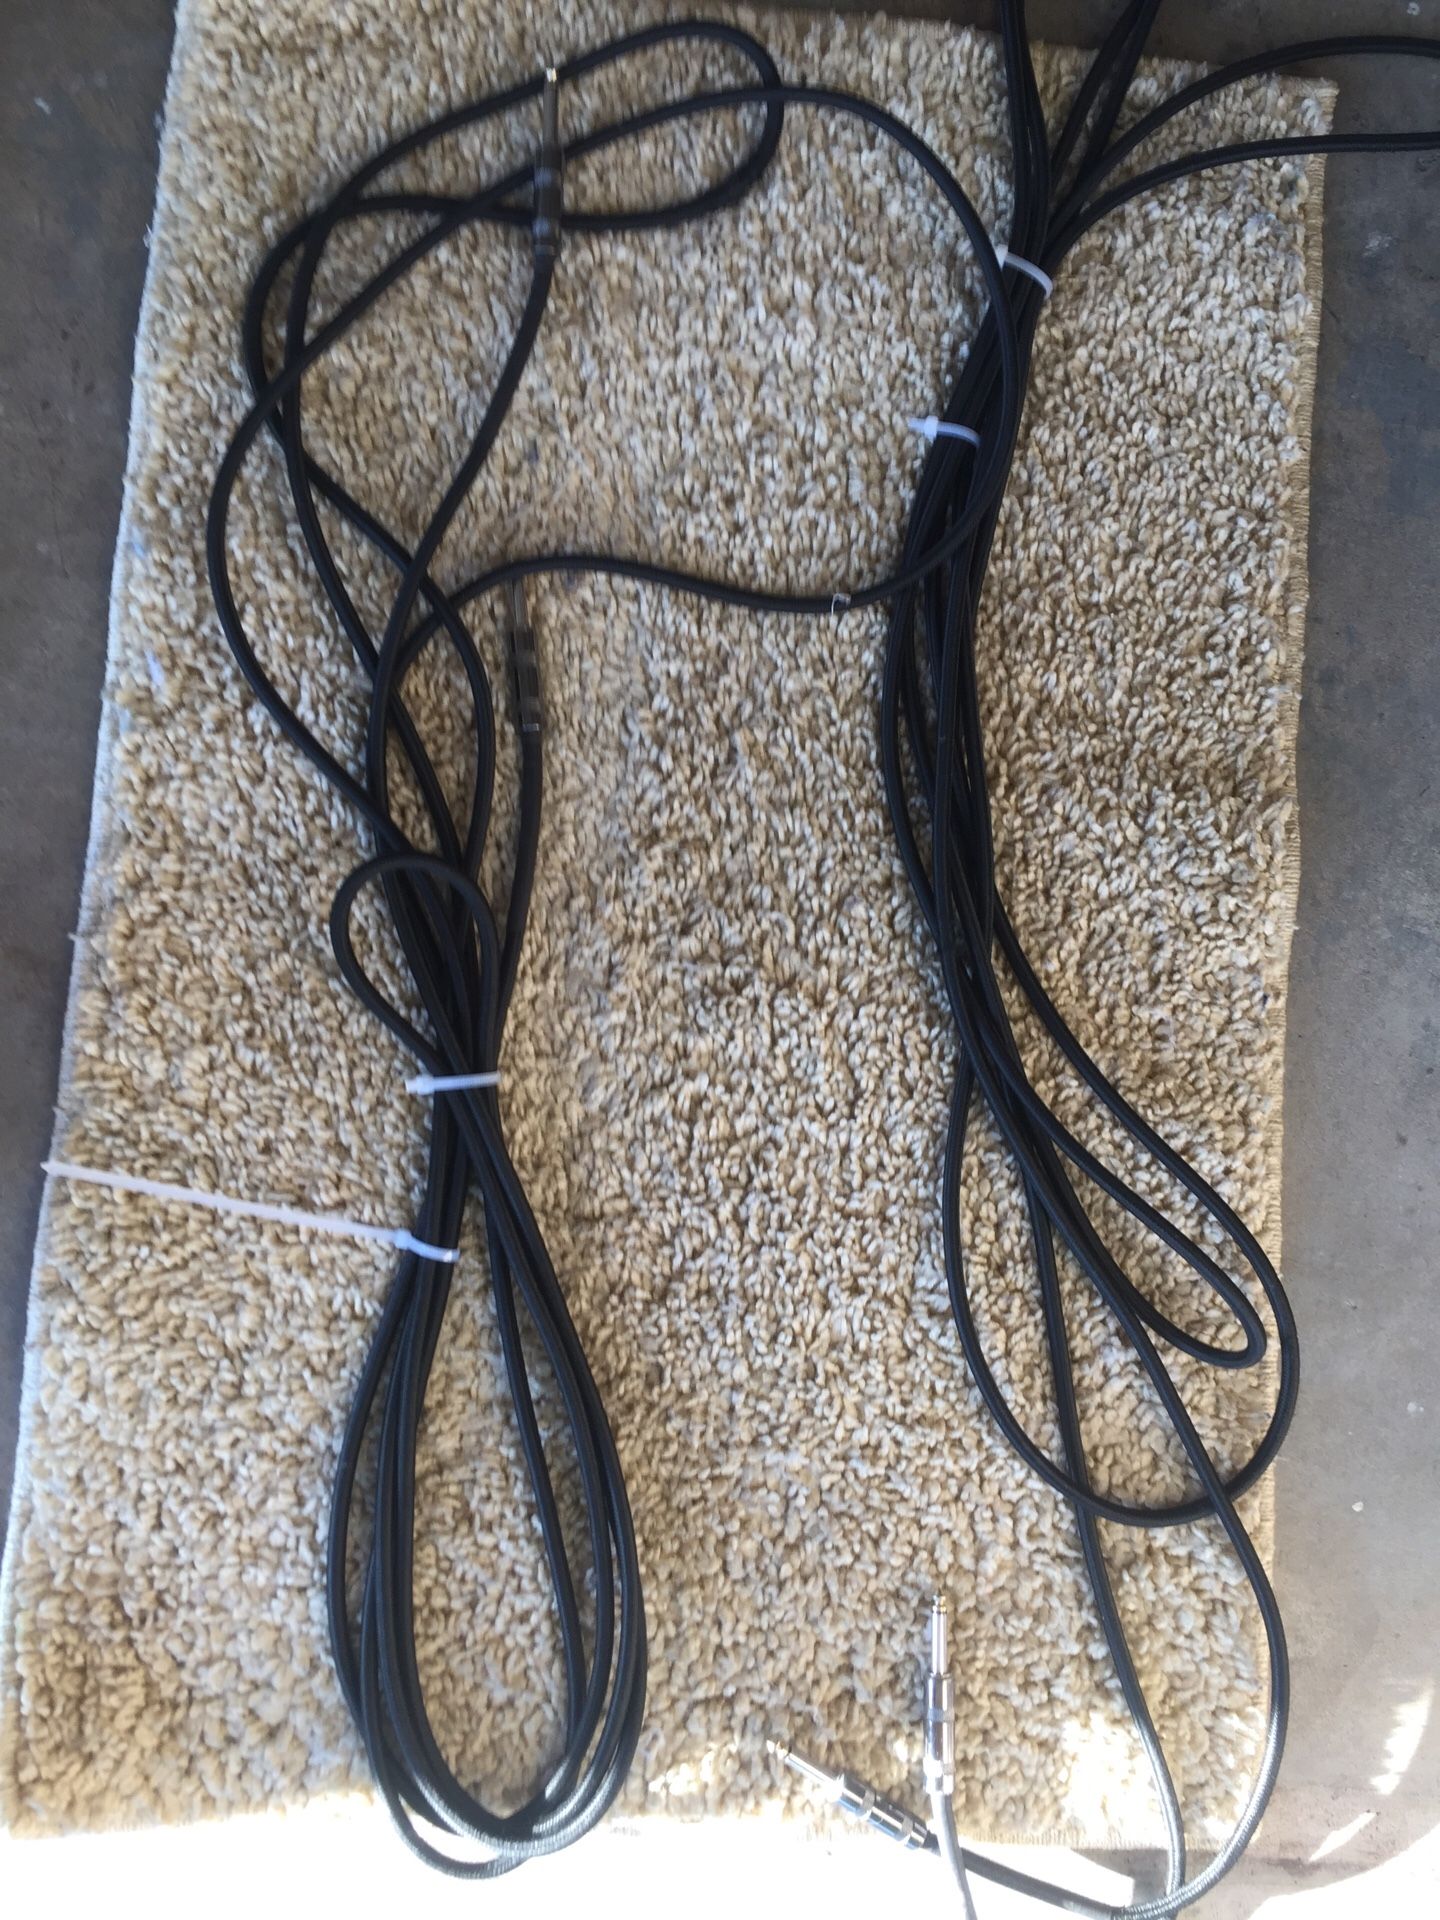 P A speaker cords